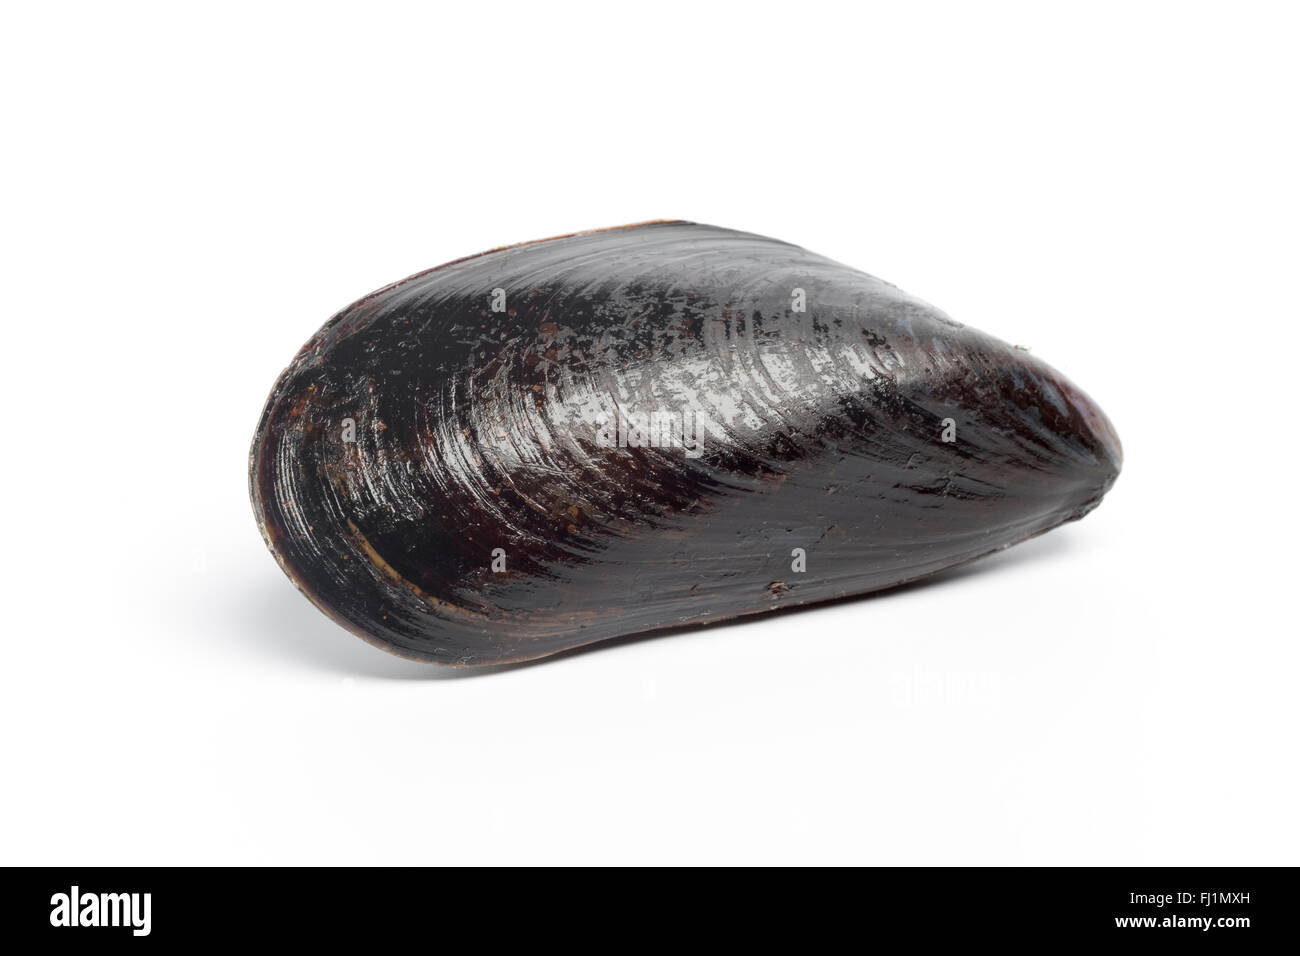 One fresh raw whole mussel on white background Stock Photo